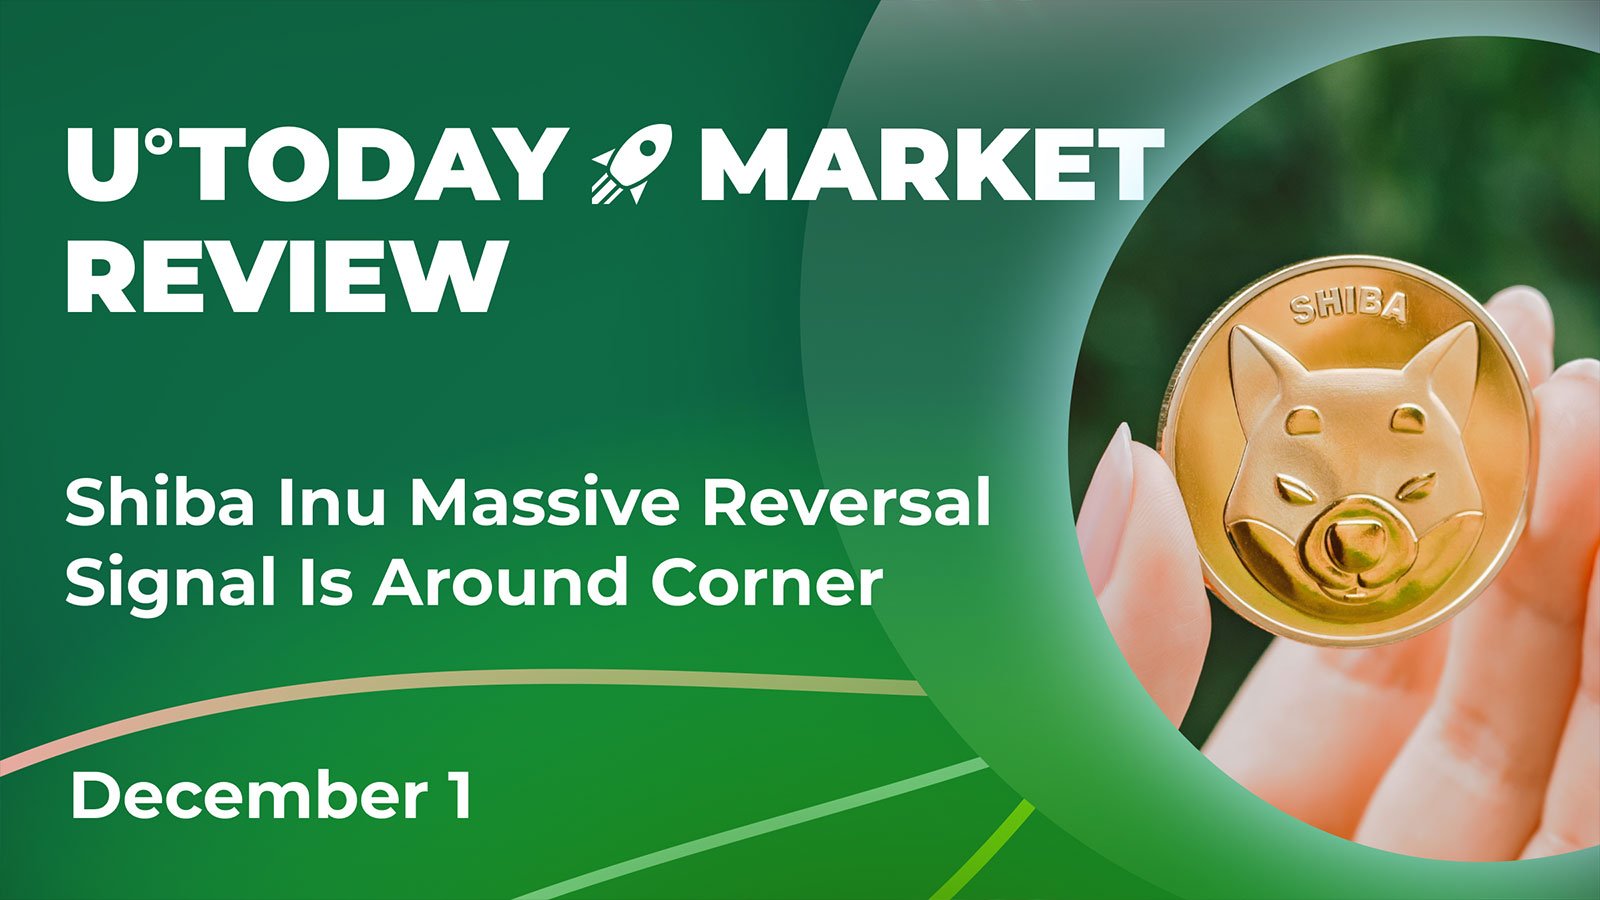 Shiba Inu Massive Reversal Signal Around Corner: Crypto Market Review, Dec. 1